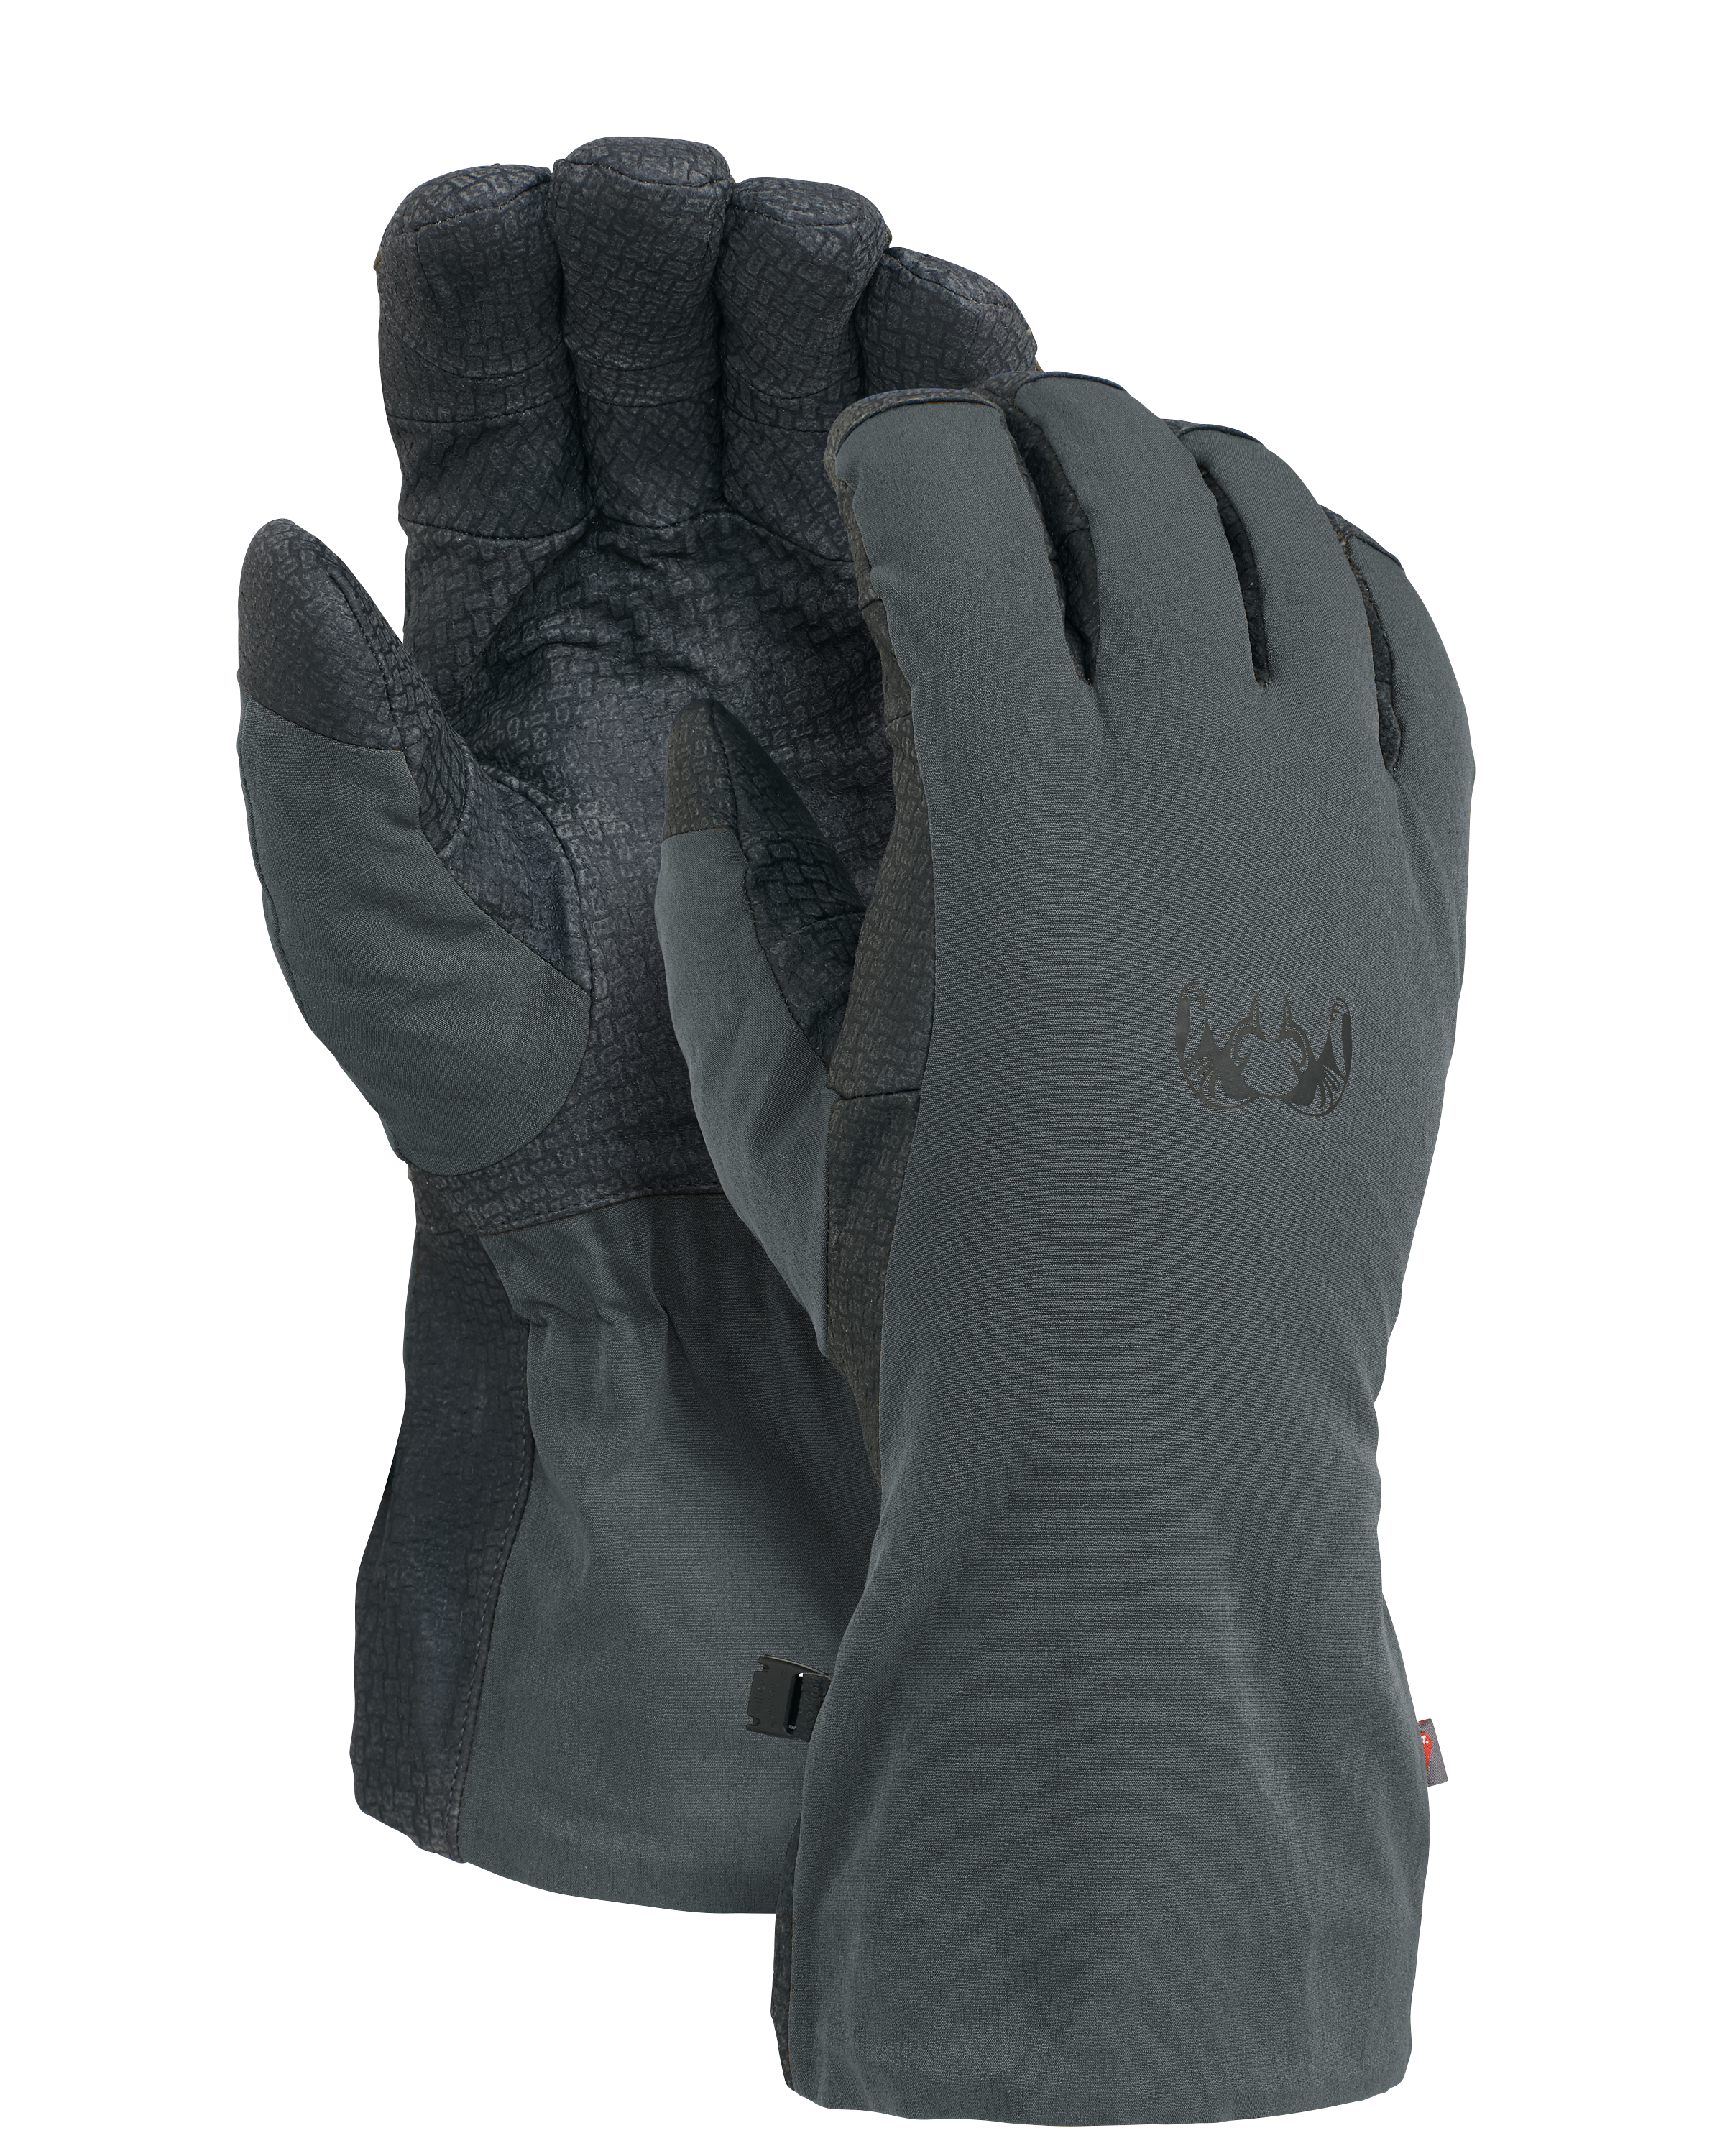 KUIU Northstar Hunting Glove in Gunmetal | Size XL